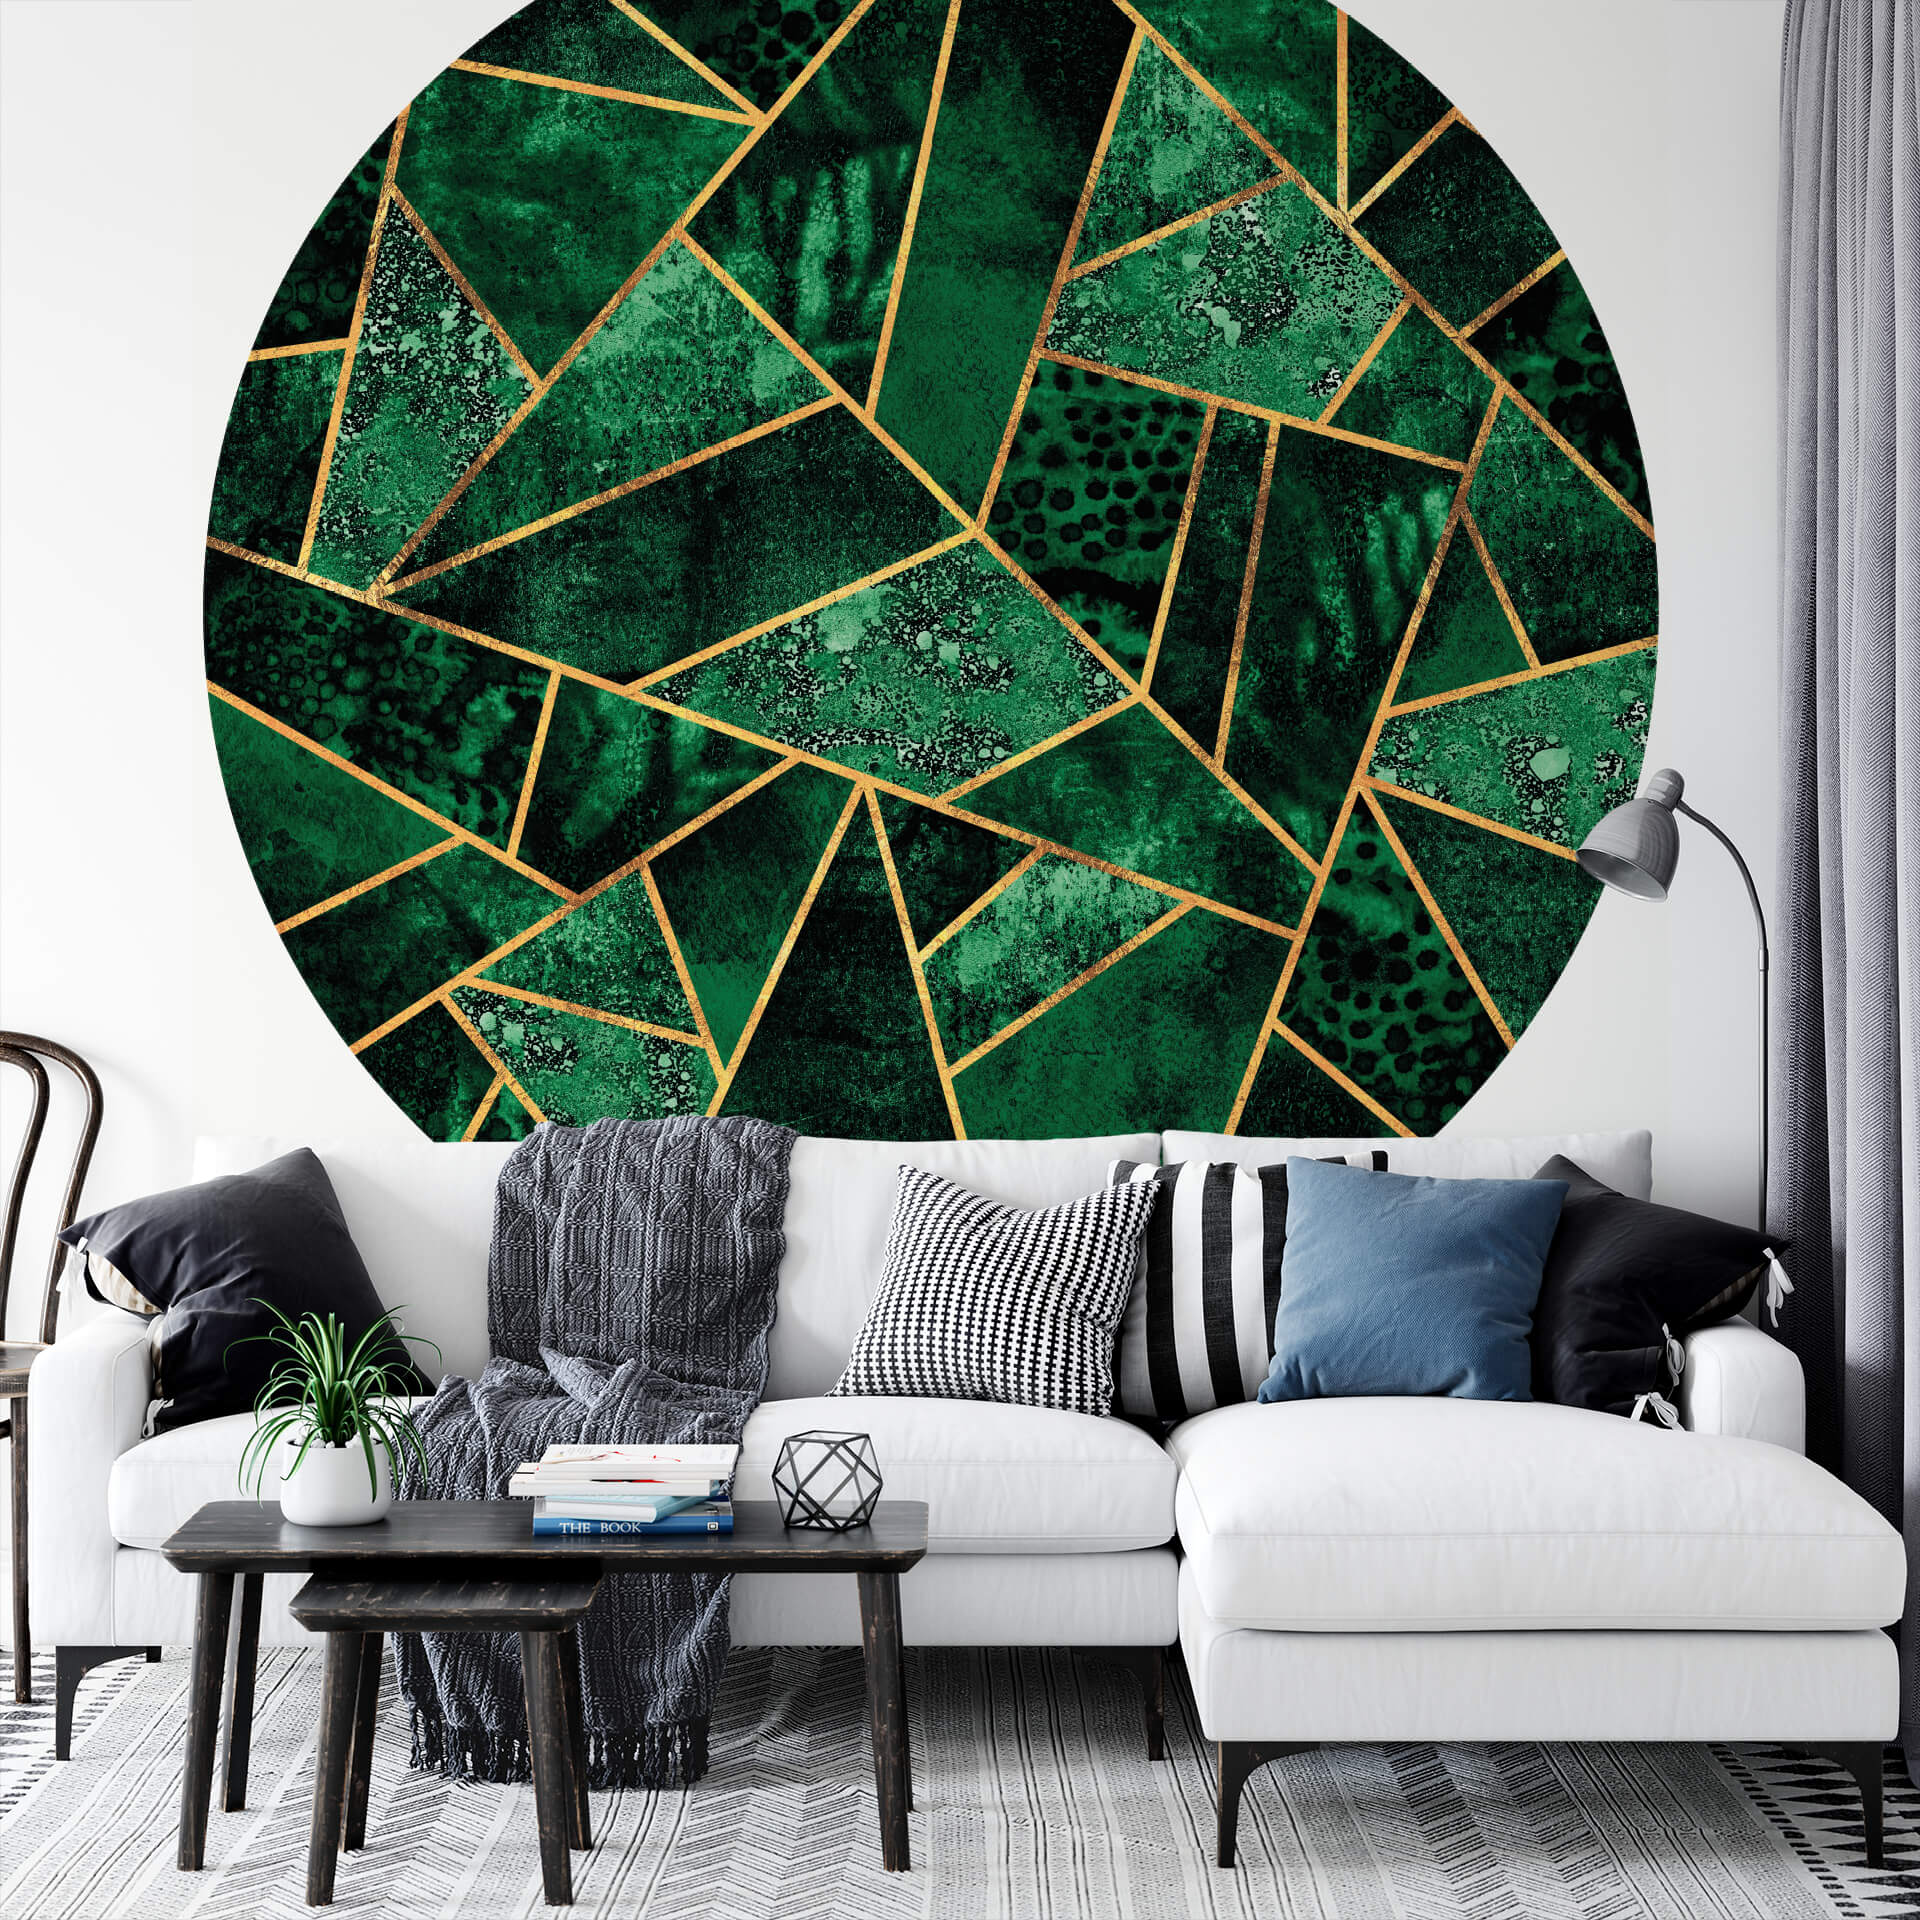 Fototapete Dark Green Emeralds 1,4 x 1,4 m